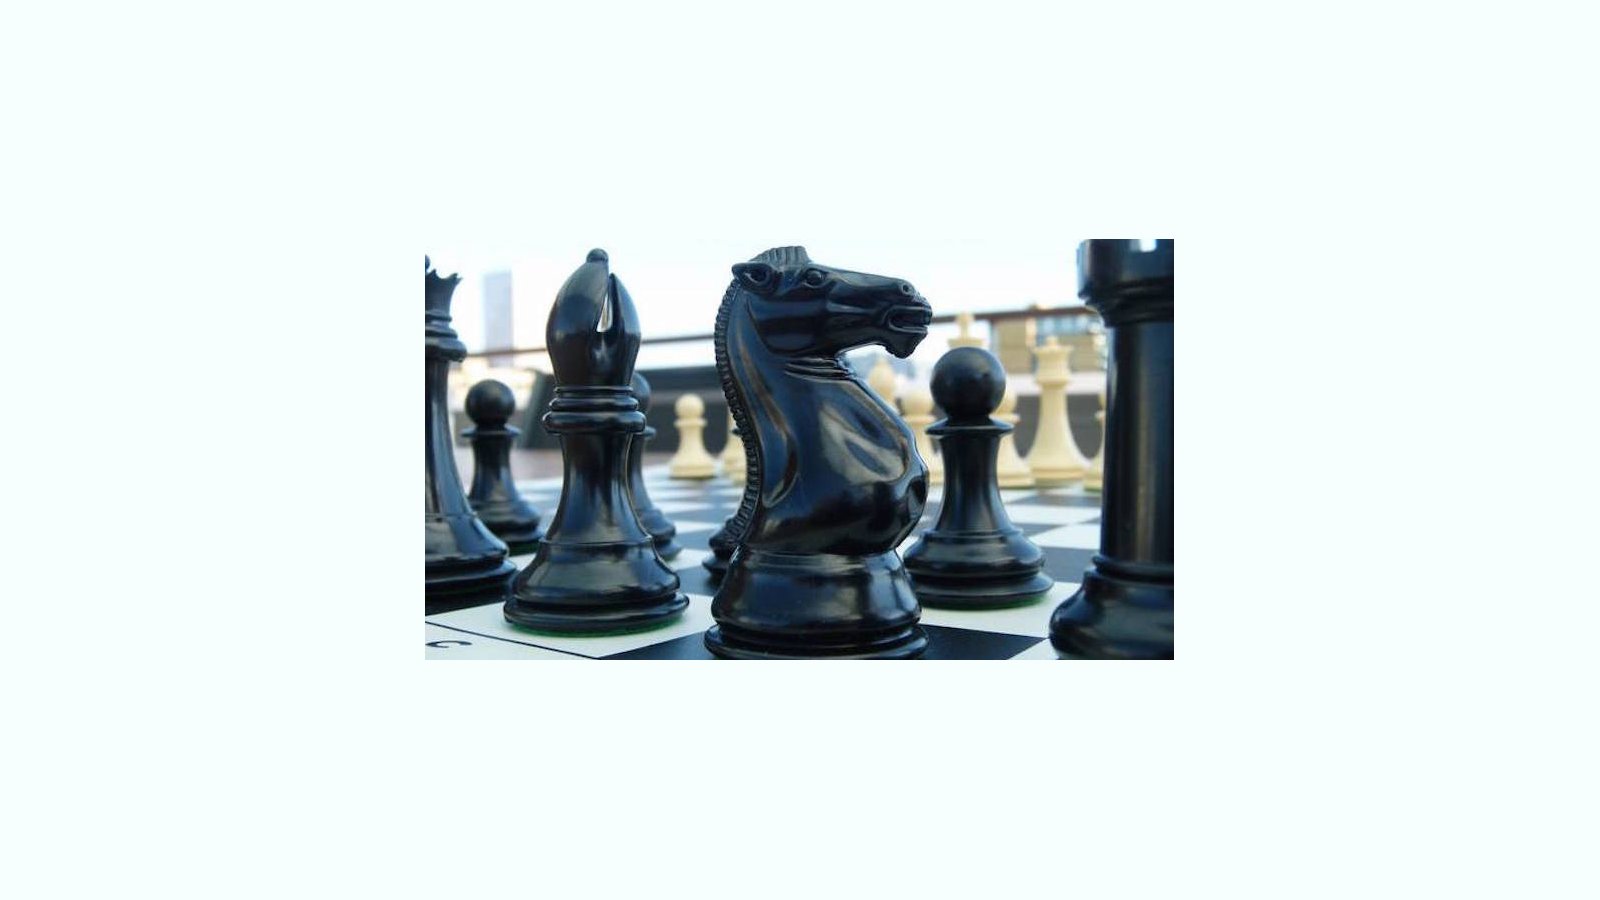 Quadruple Weight Tournament Chess Set